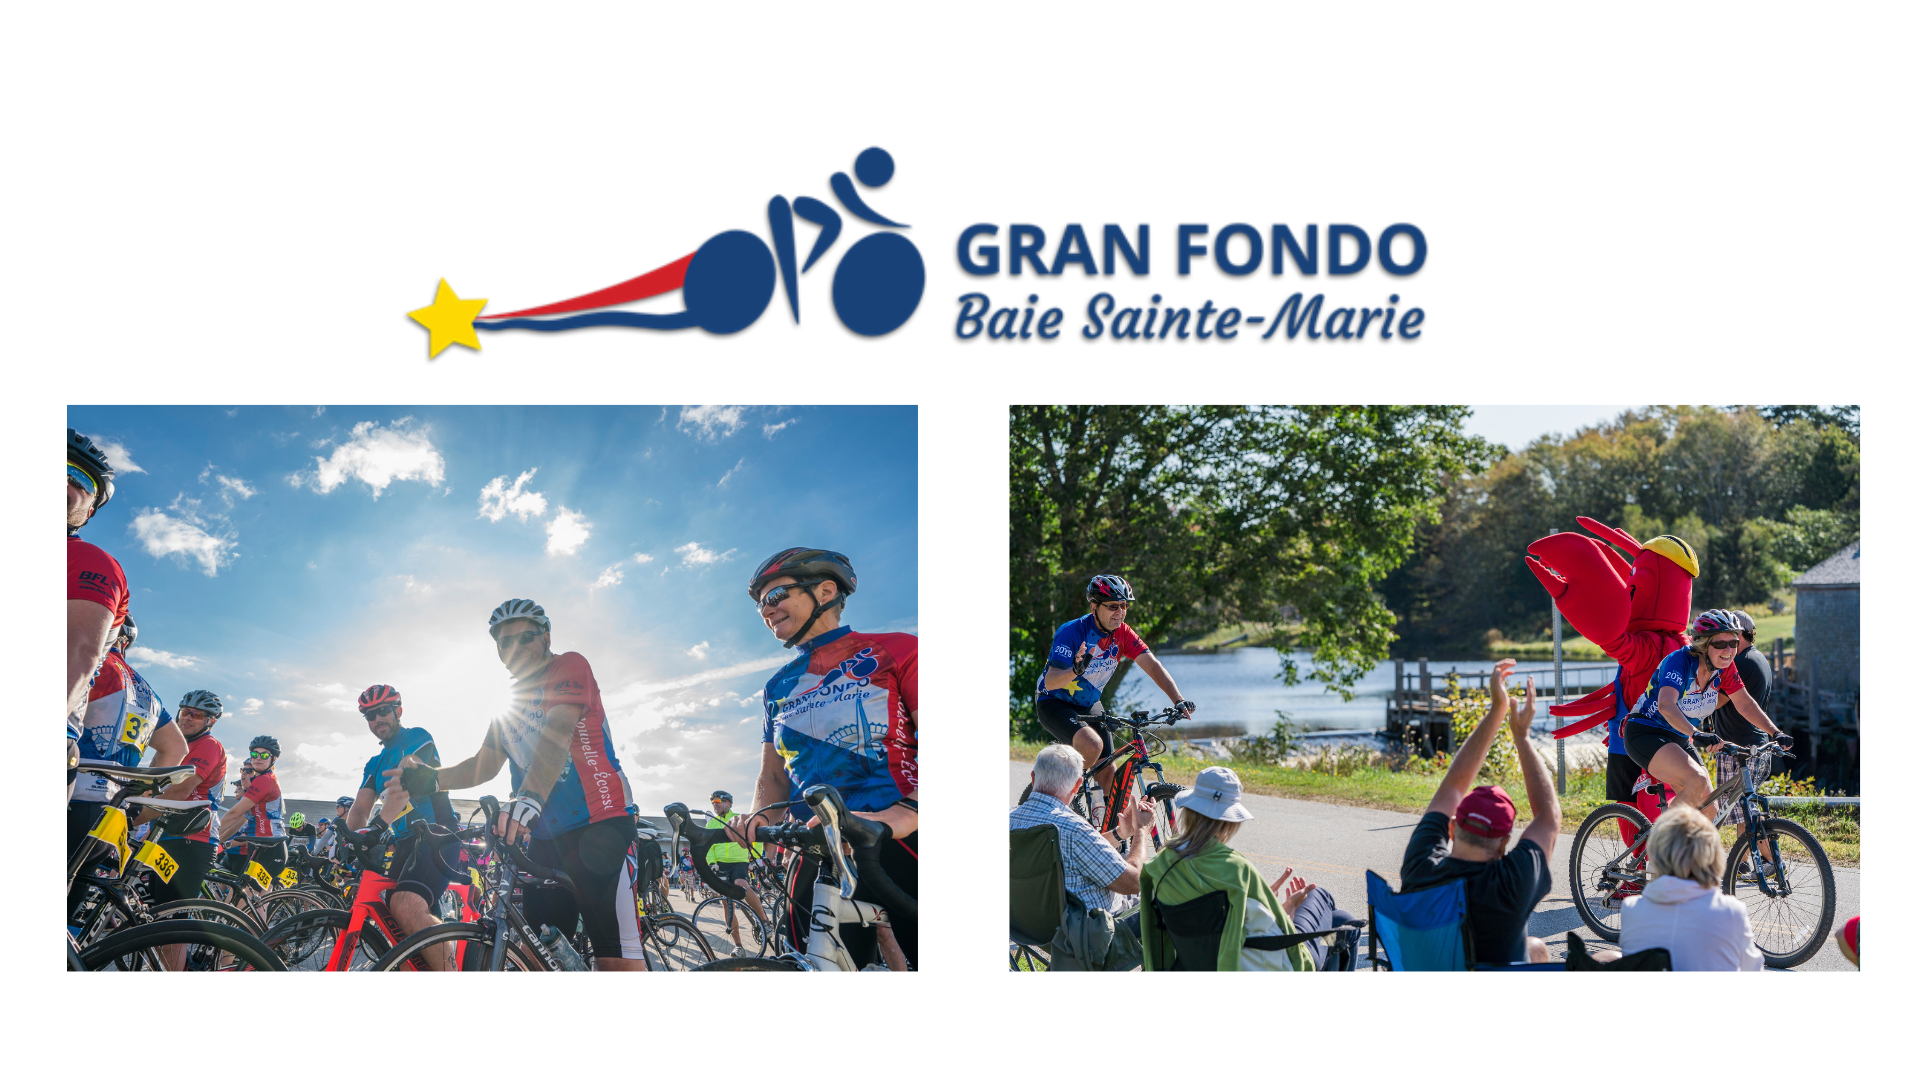 Deux images de cyclistes lors du Gran Fondo Baie Sainte-Marie 2019 et le logo du Gran Fondo Baie Sainte-Marie.